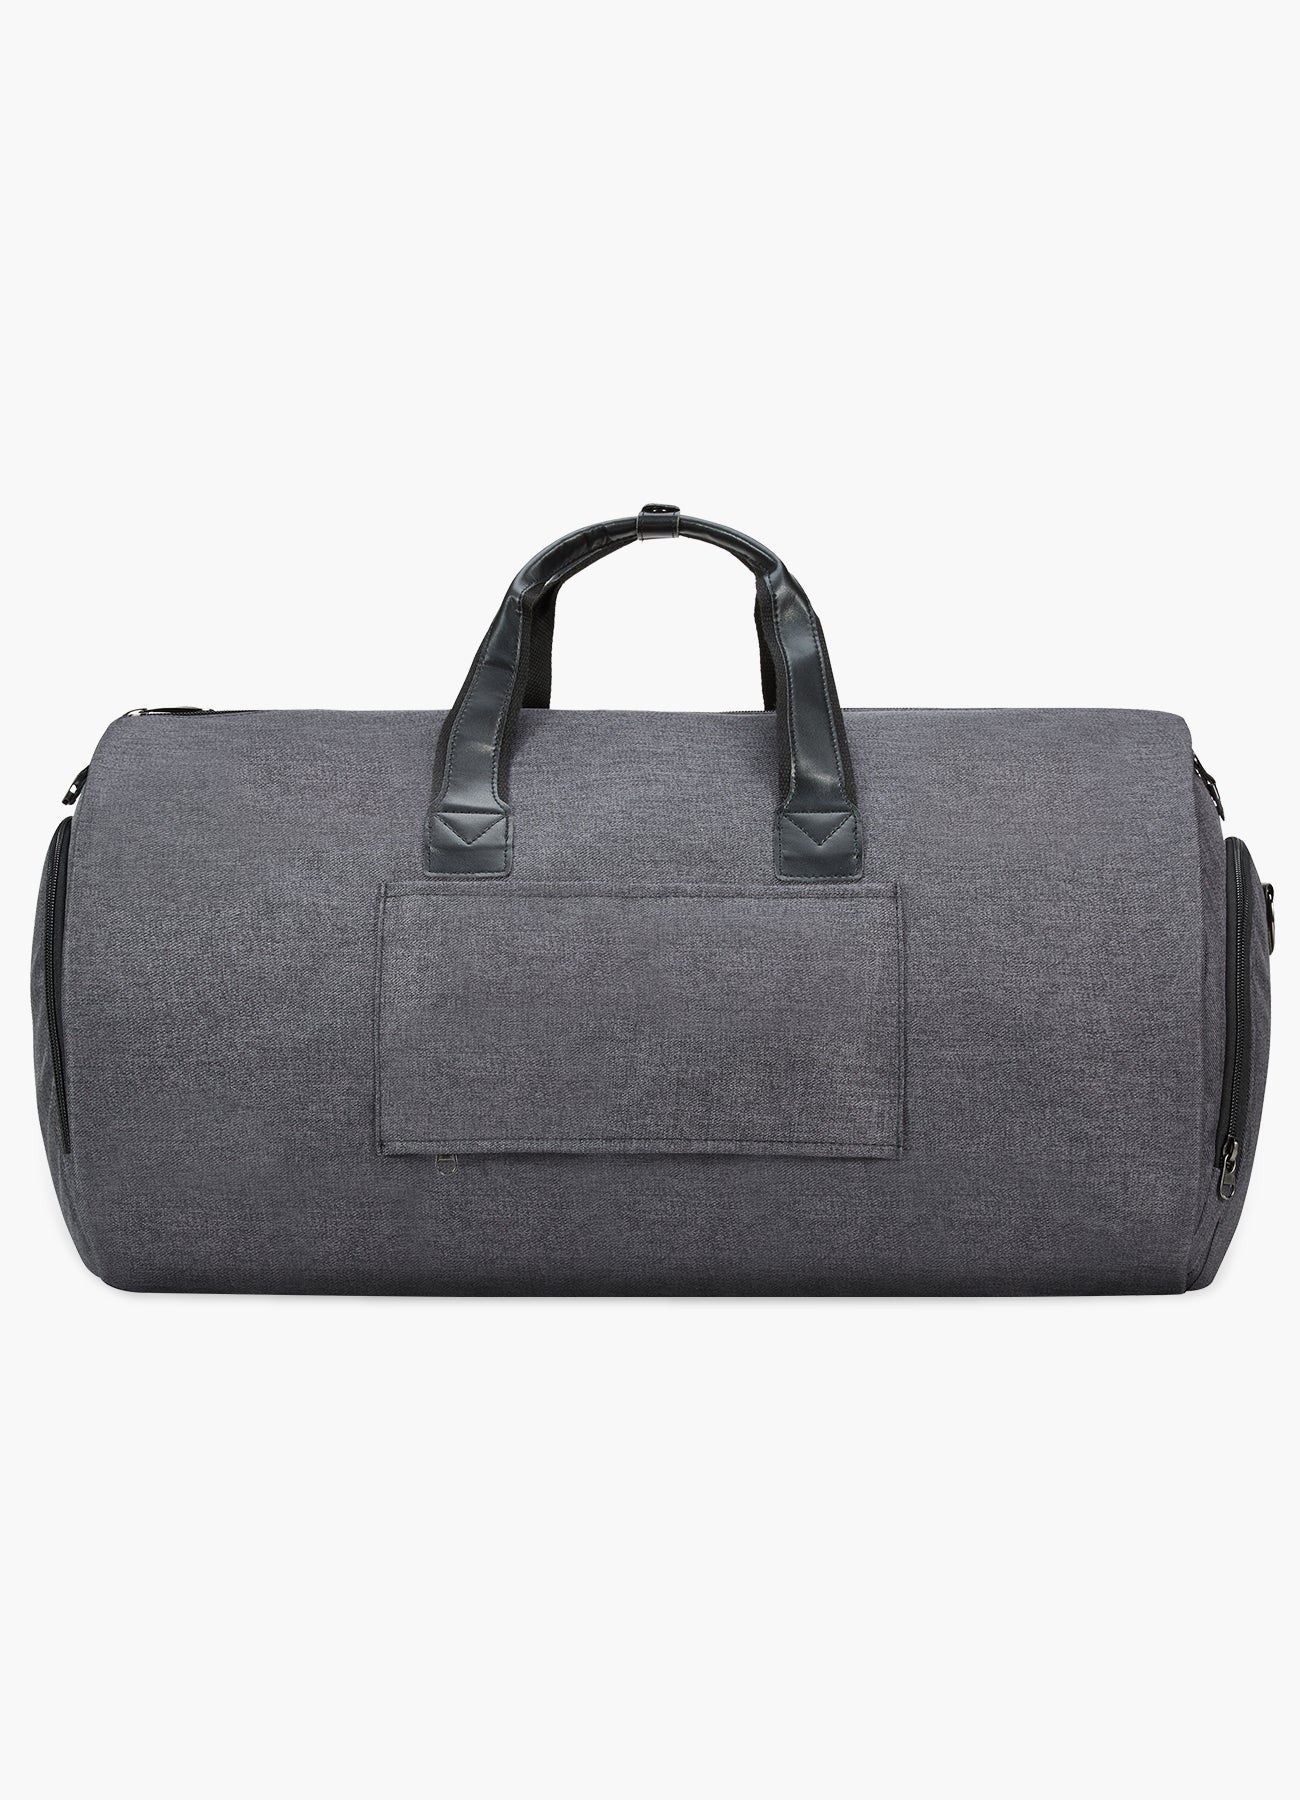 Garment Duffle Bags for Travel, Bukere Convertible Carry on Garment Du–